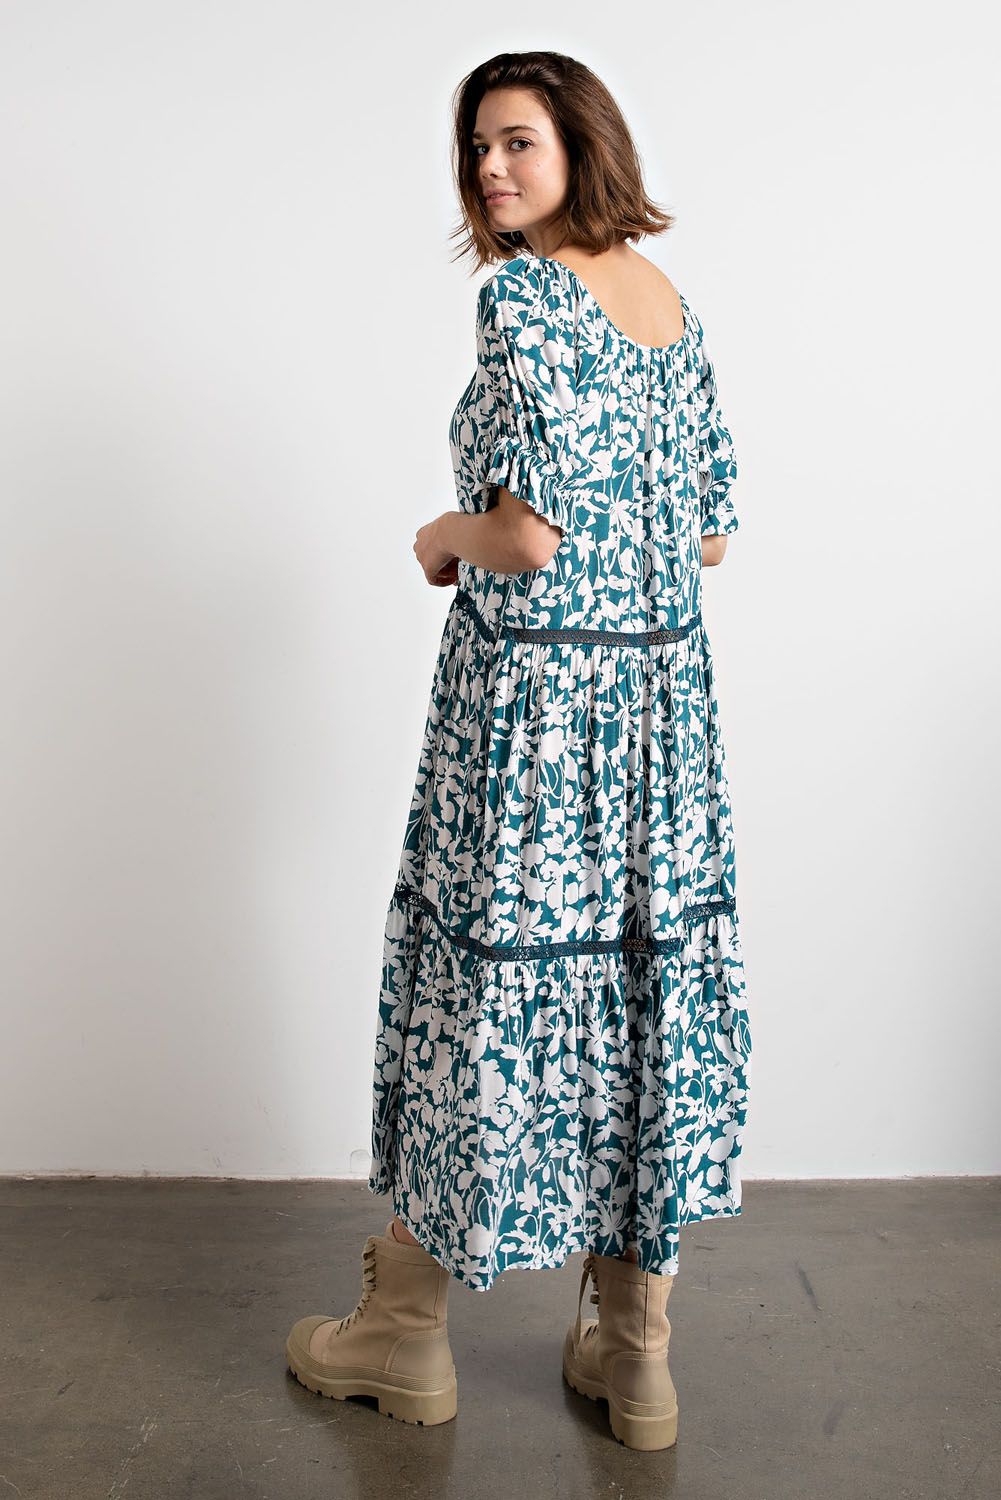 Easel Elasticized Edges U Neckline Crochet Lace Trim Relaxed Ruffled Dress - Roulhac Fashion Boutique